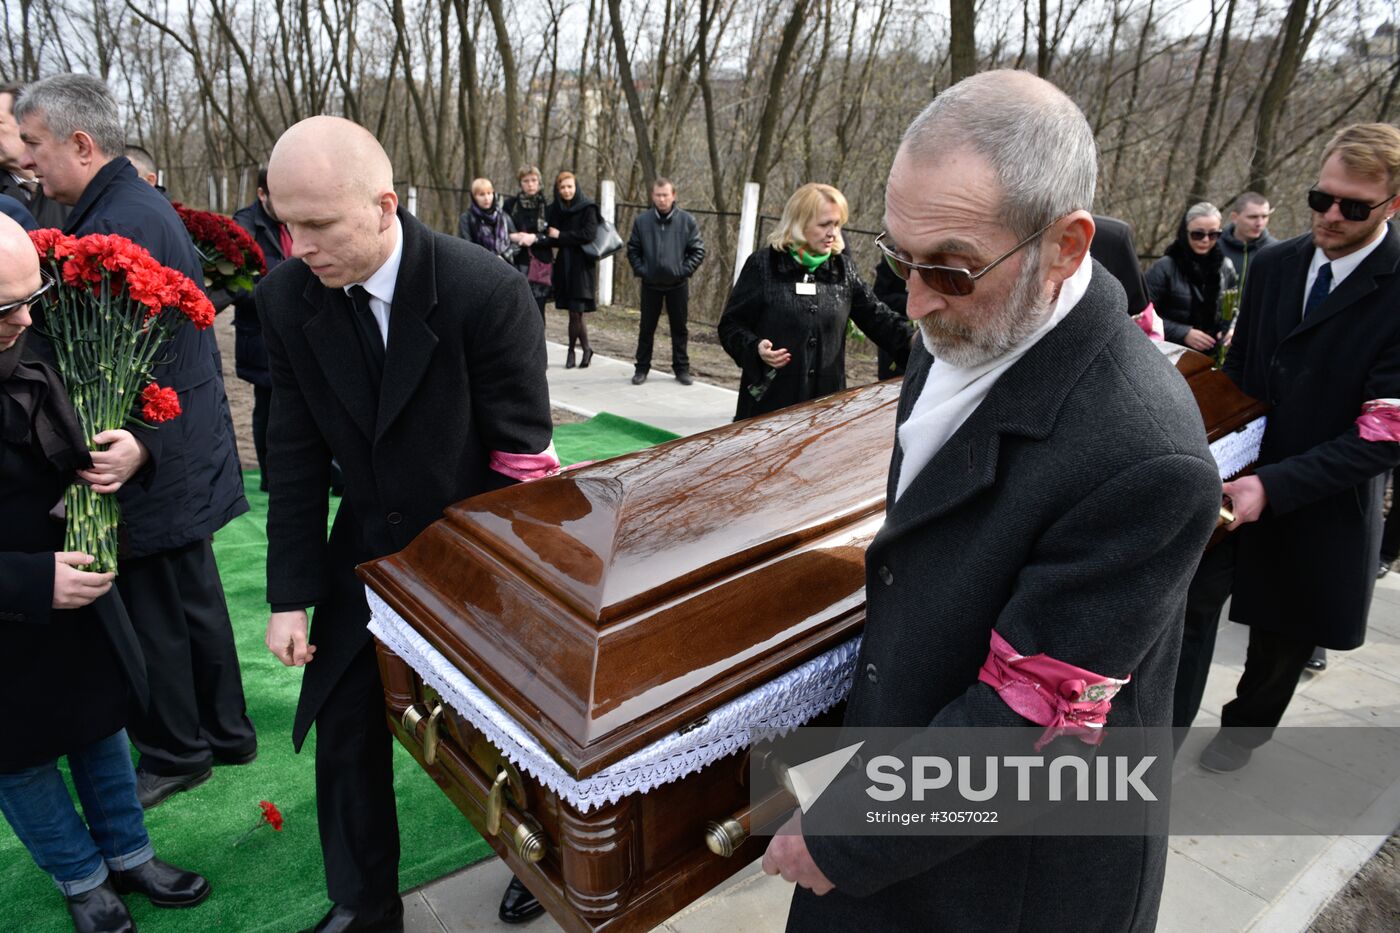 Farewell ceremony for former State Duma deputy Denis Voronenkov in Kiev